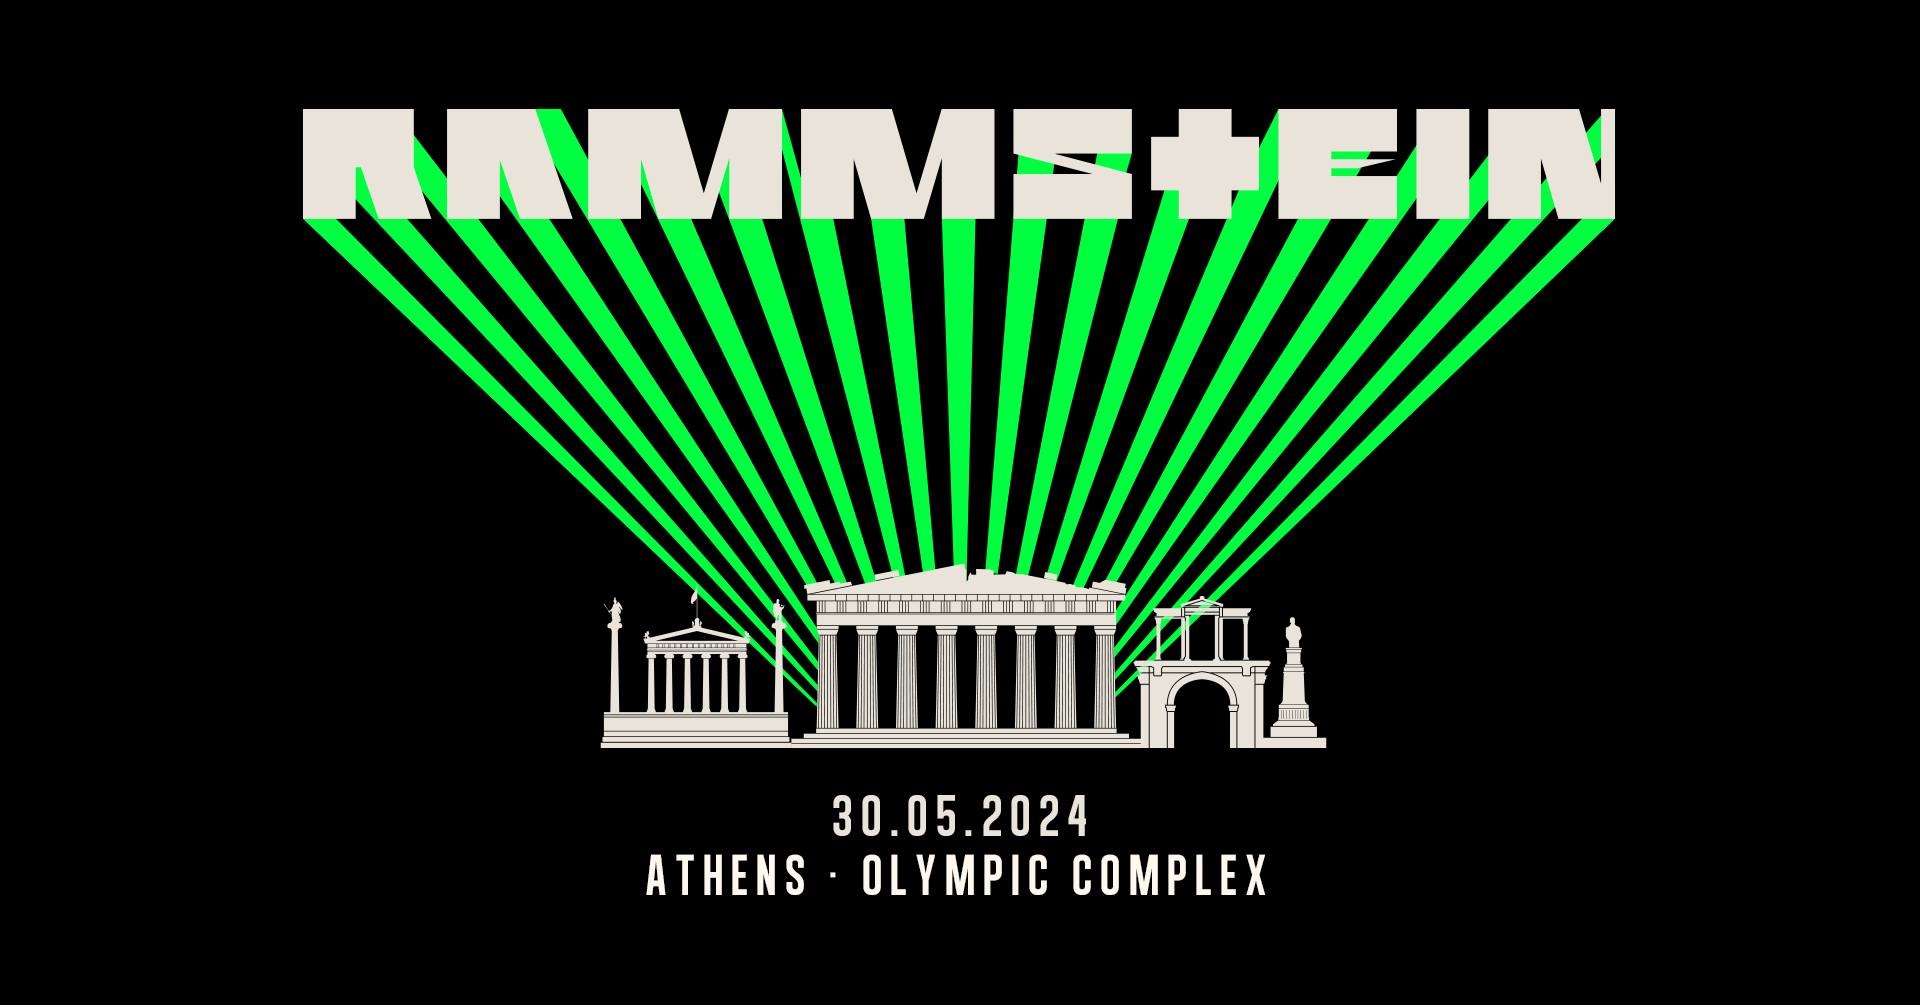 Rammstein live in Athens 2024 - Στον περιβάλλοντα χώρο του ΟΑΚΑ